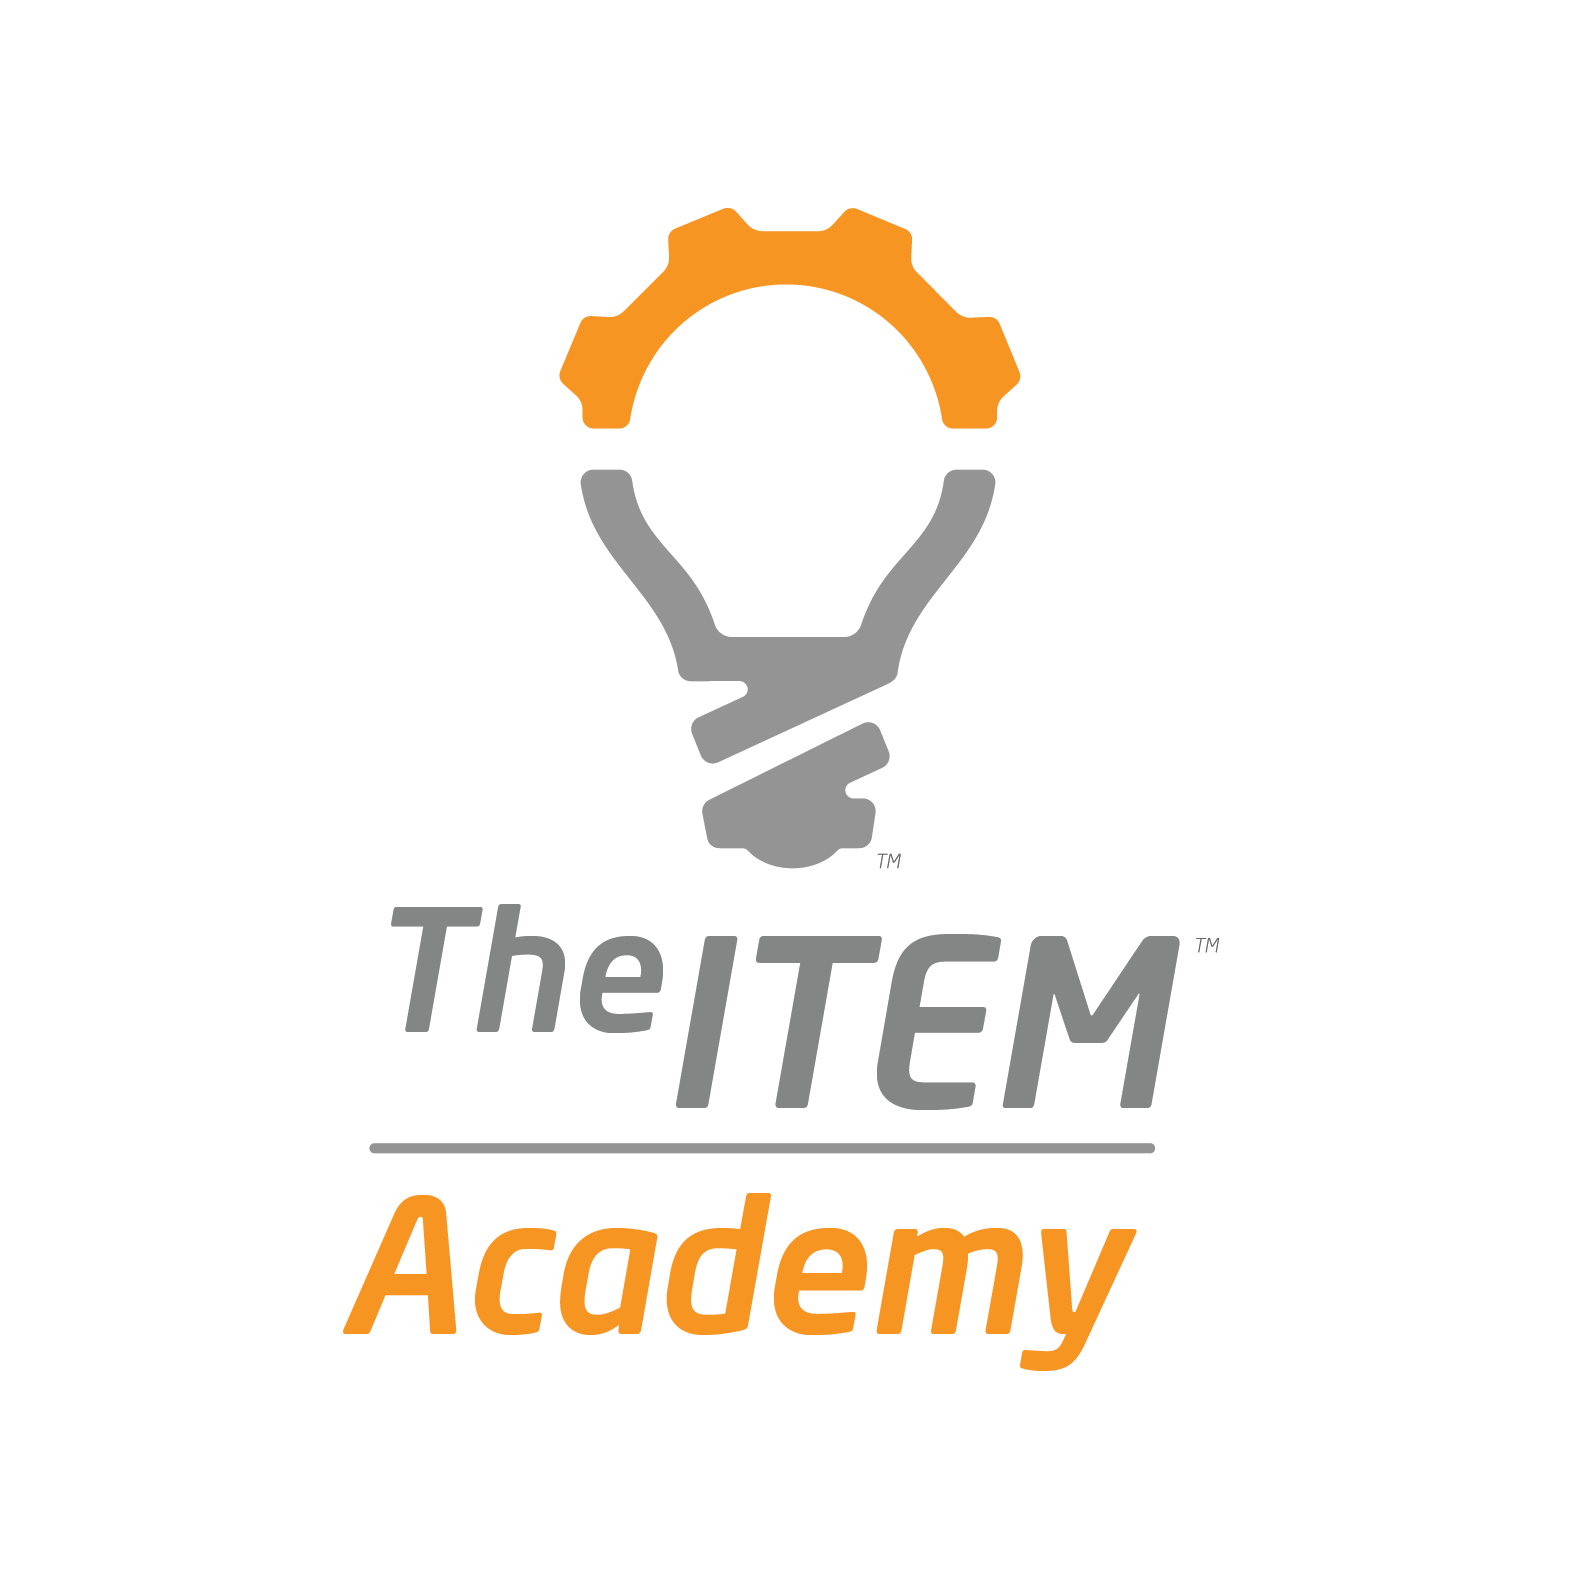 The ITEM Academy